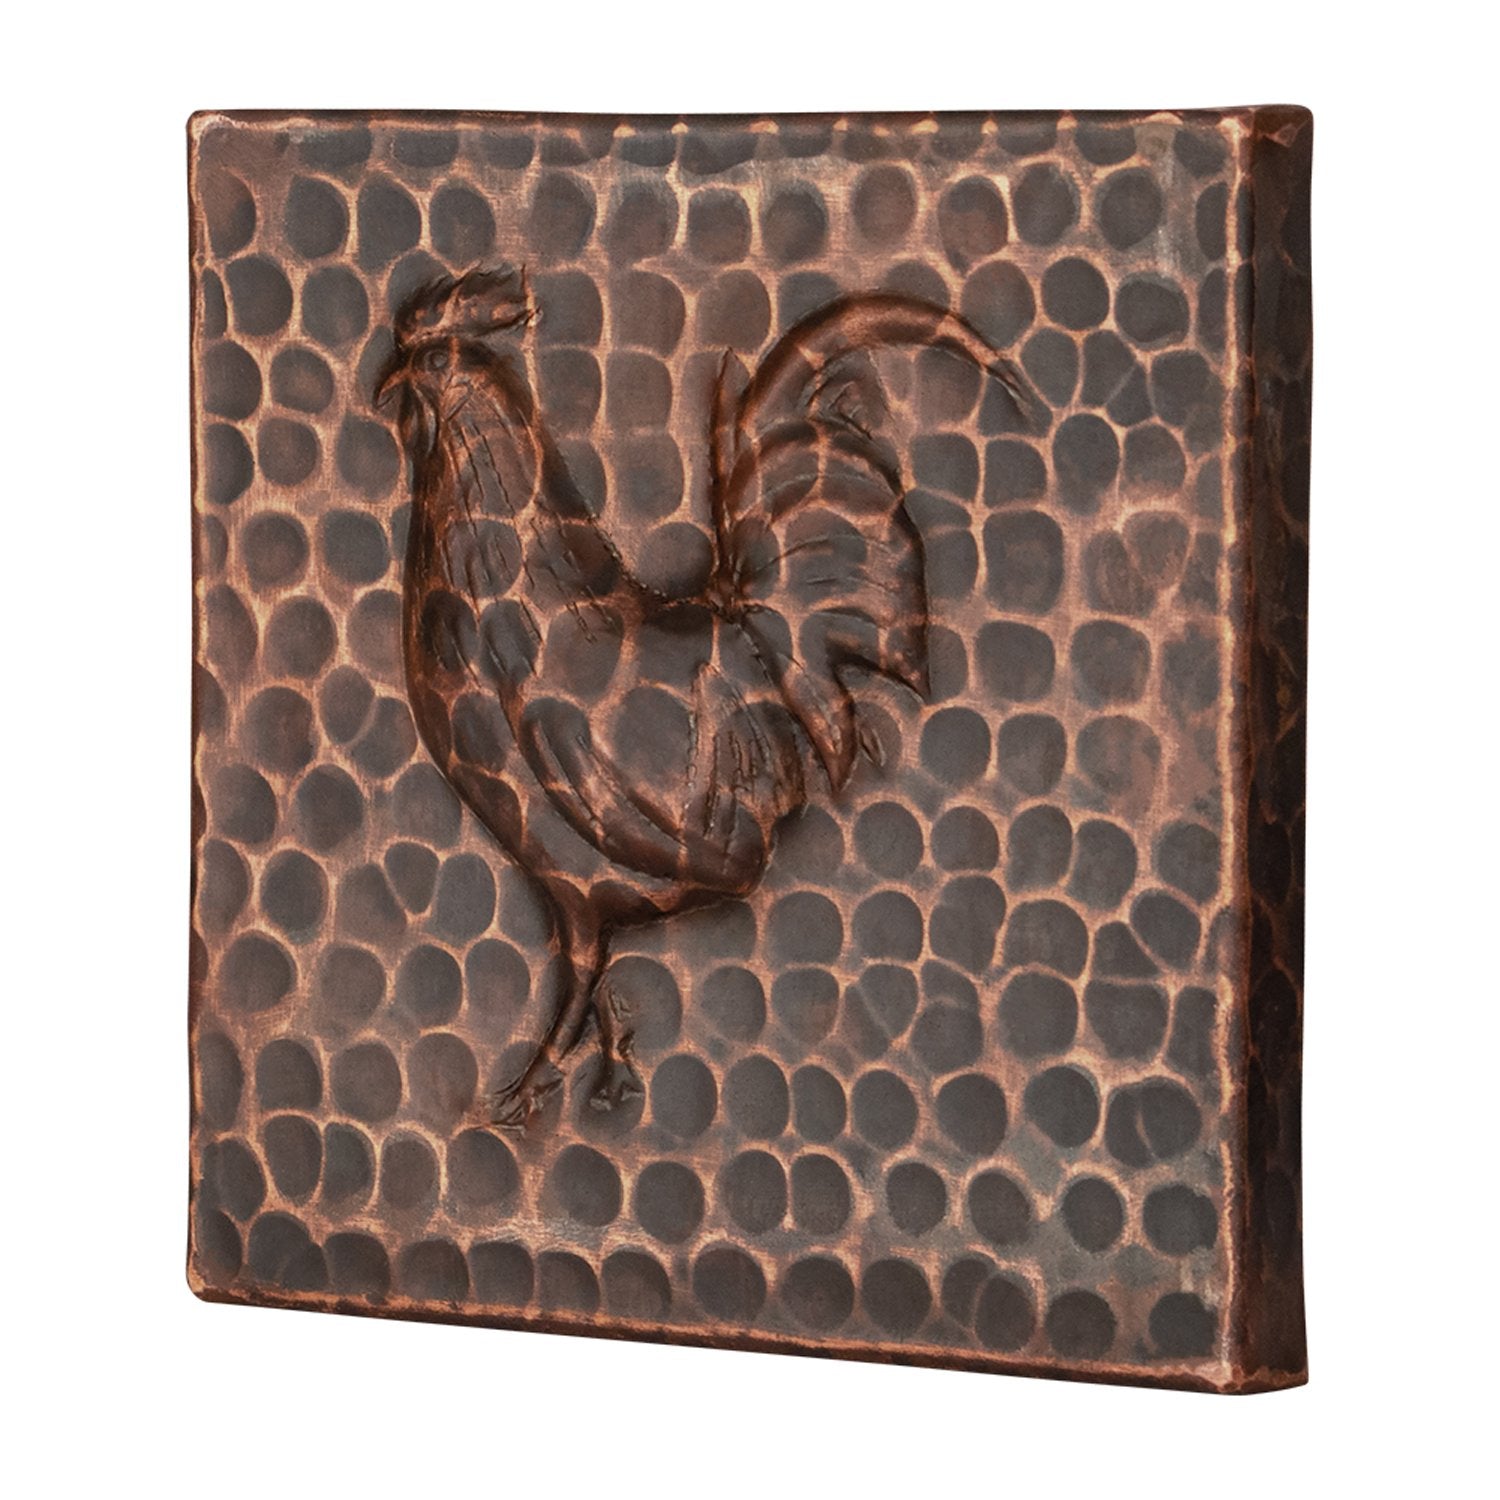 4" x 4" Hammered Copper Rooster Tile, pack of 4 Tiles